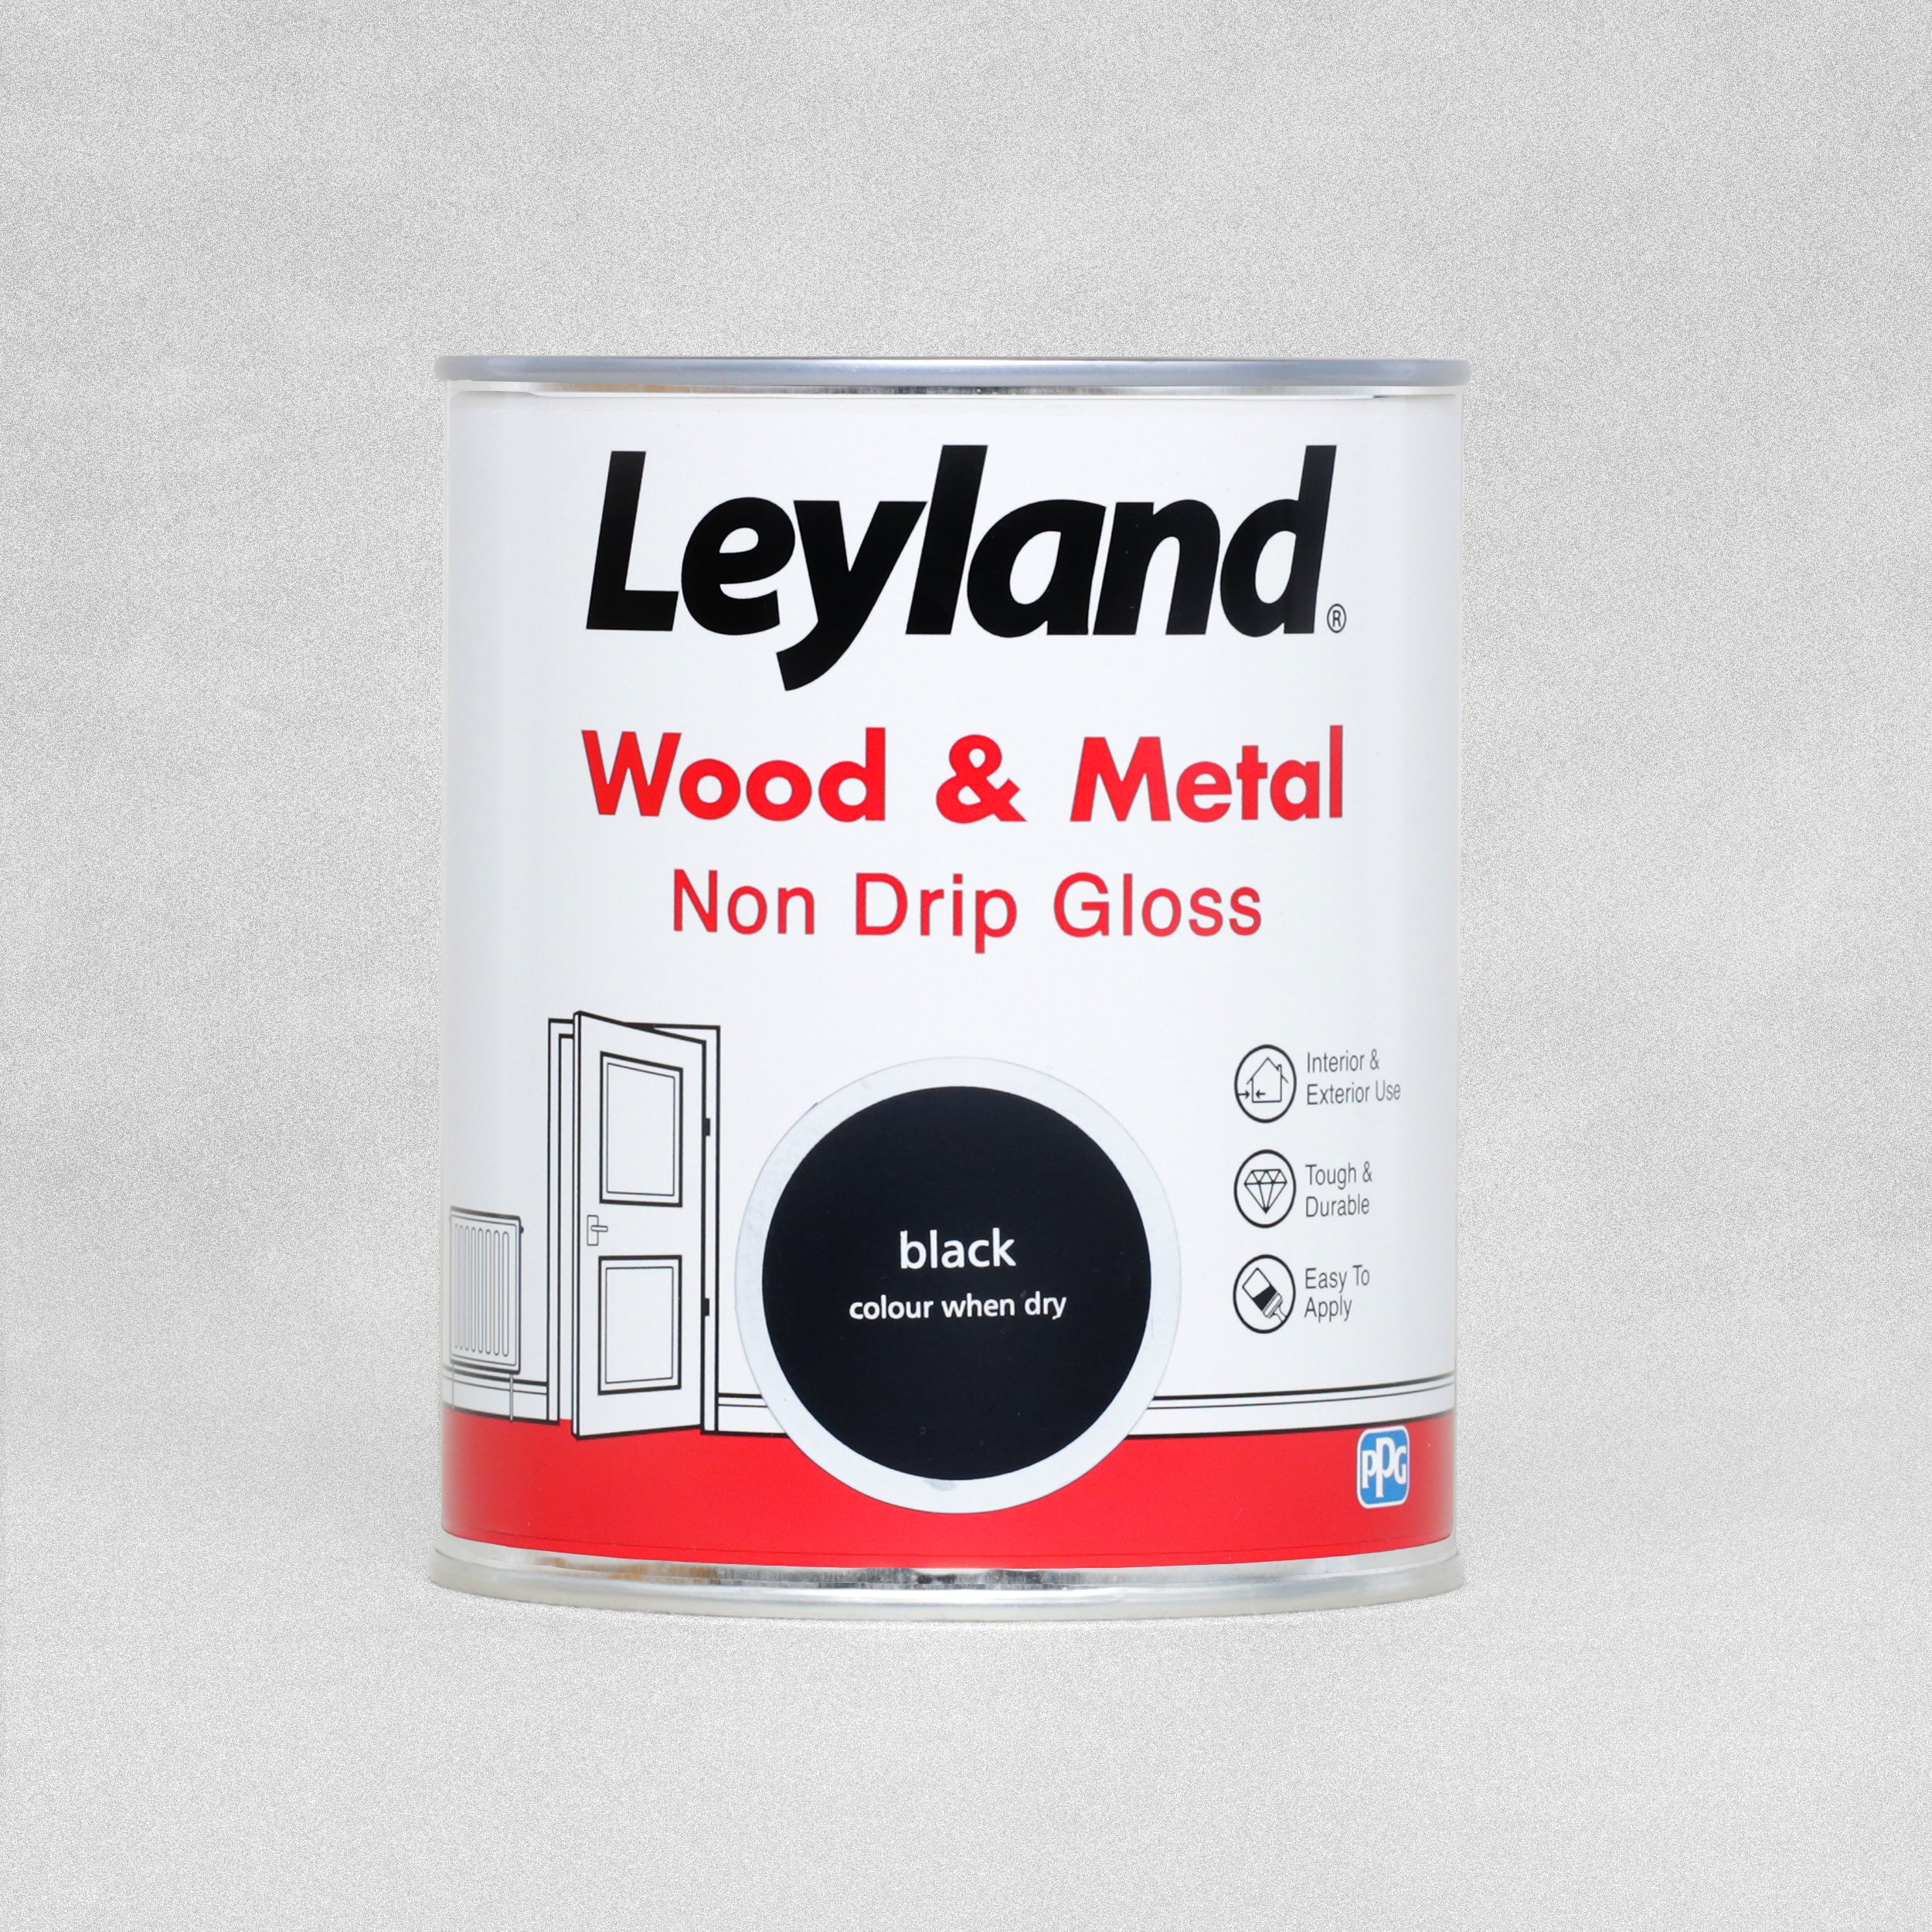 Leyland Wood and Metal Non Drip Gloss Paint 750ml - Black